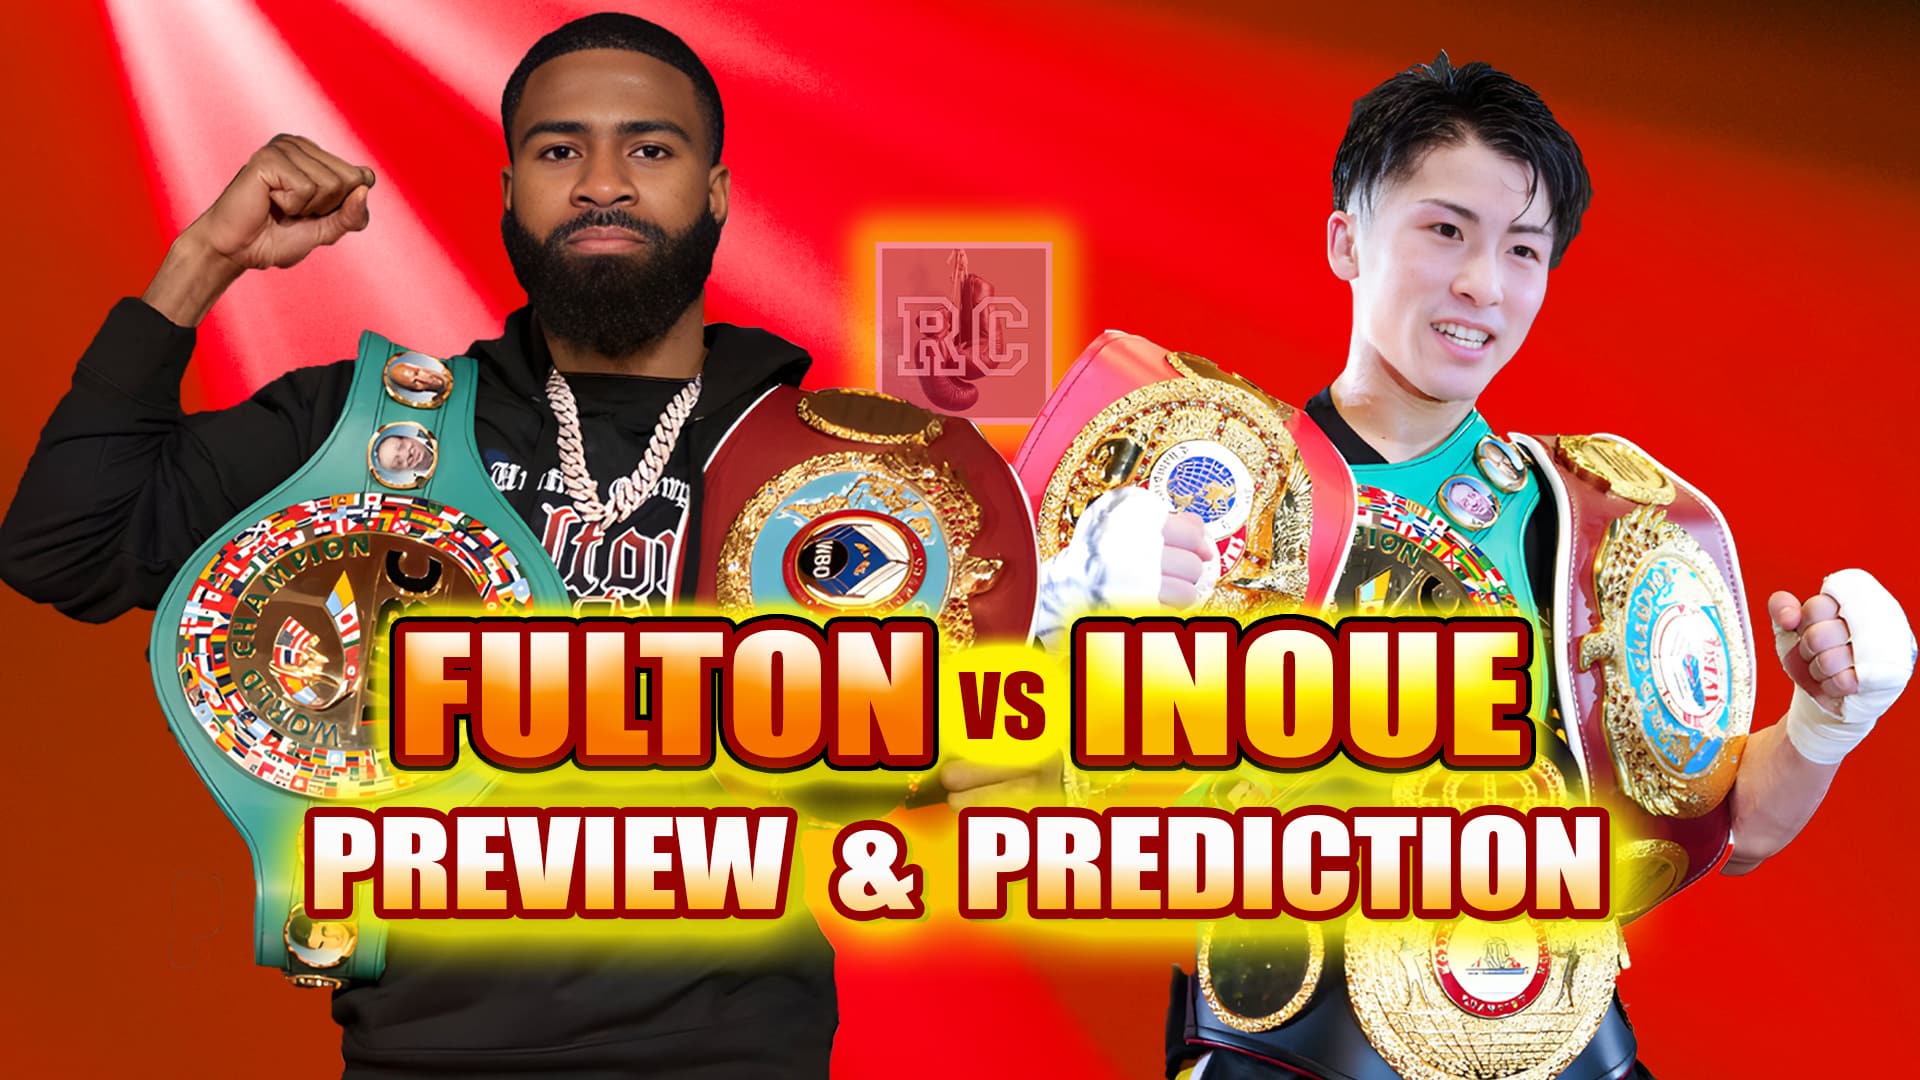 Image: Stephen Fulton vs Naoya Inoue - Preview & Prediction VIDEO